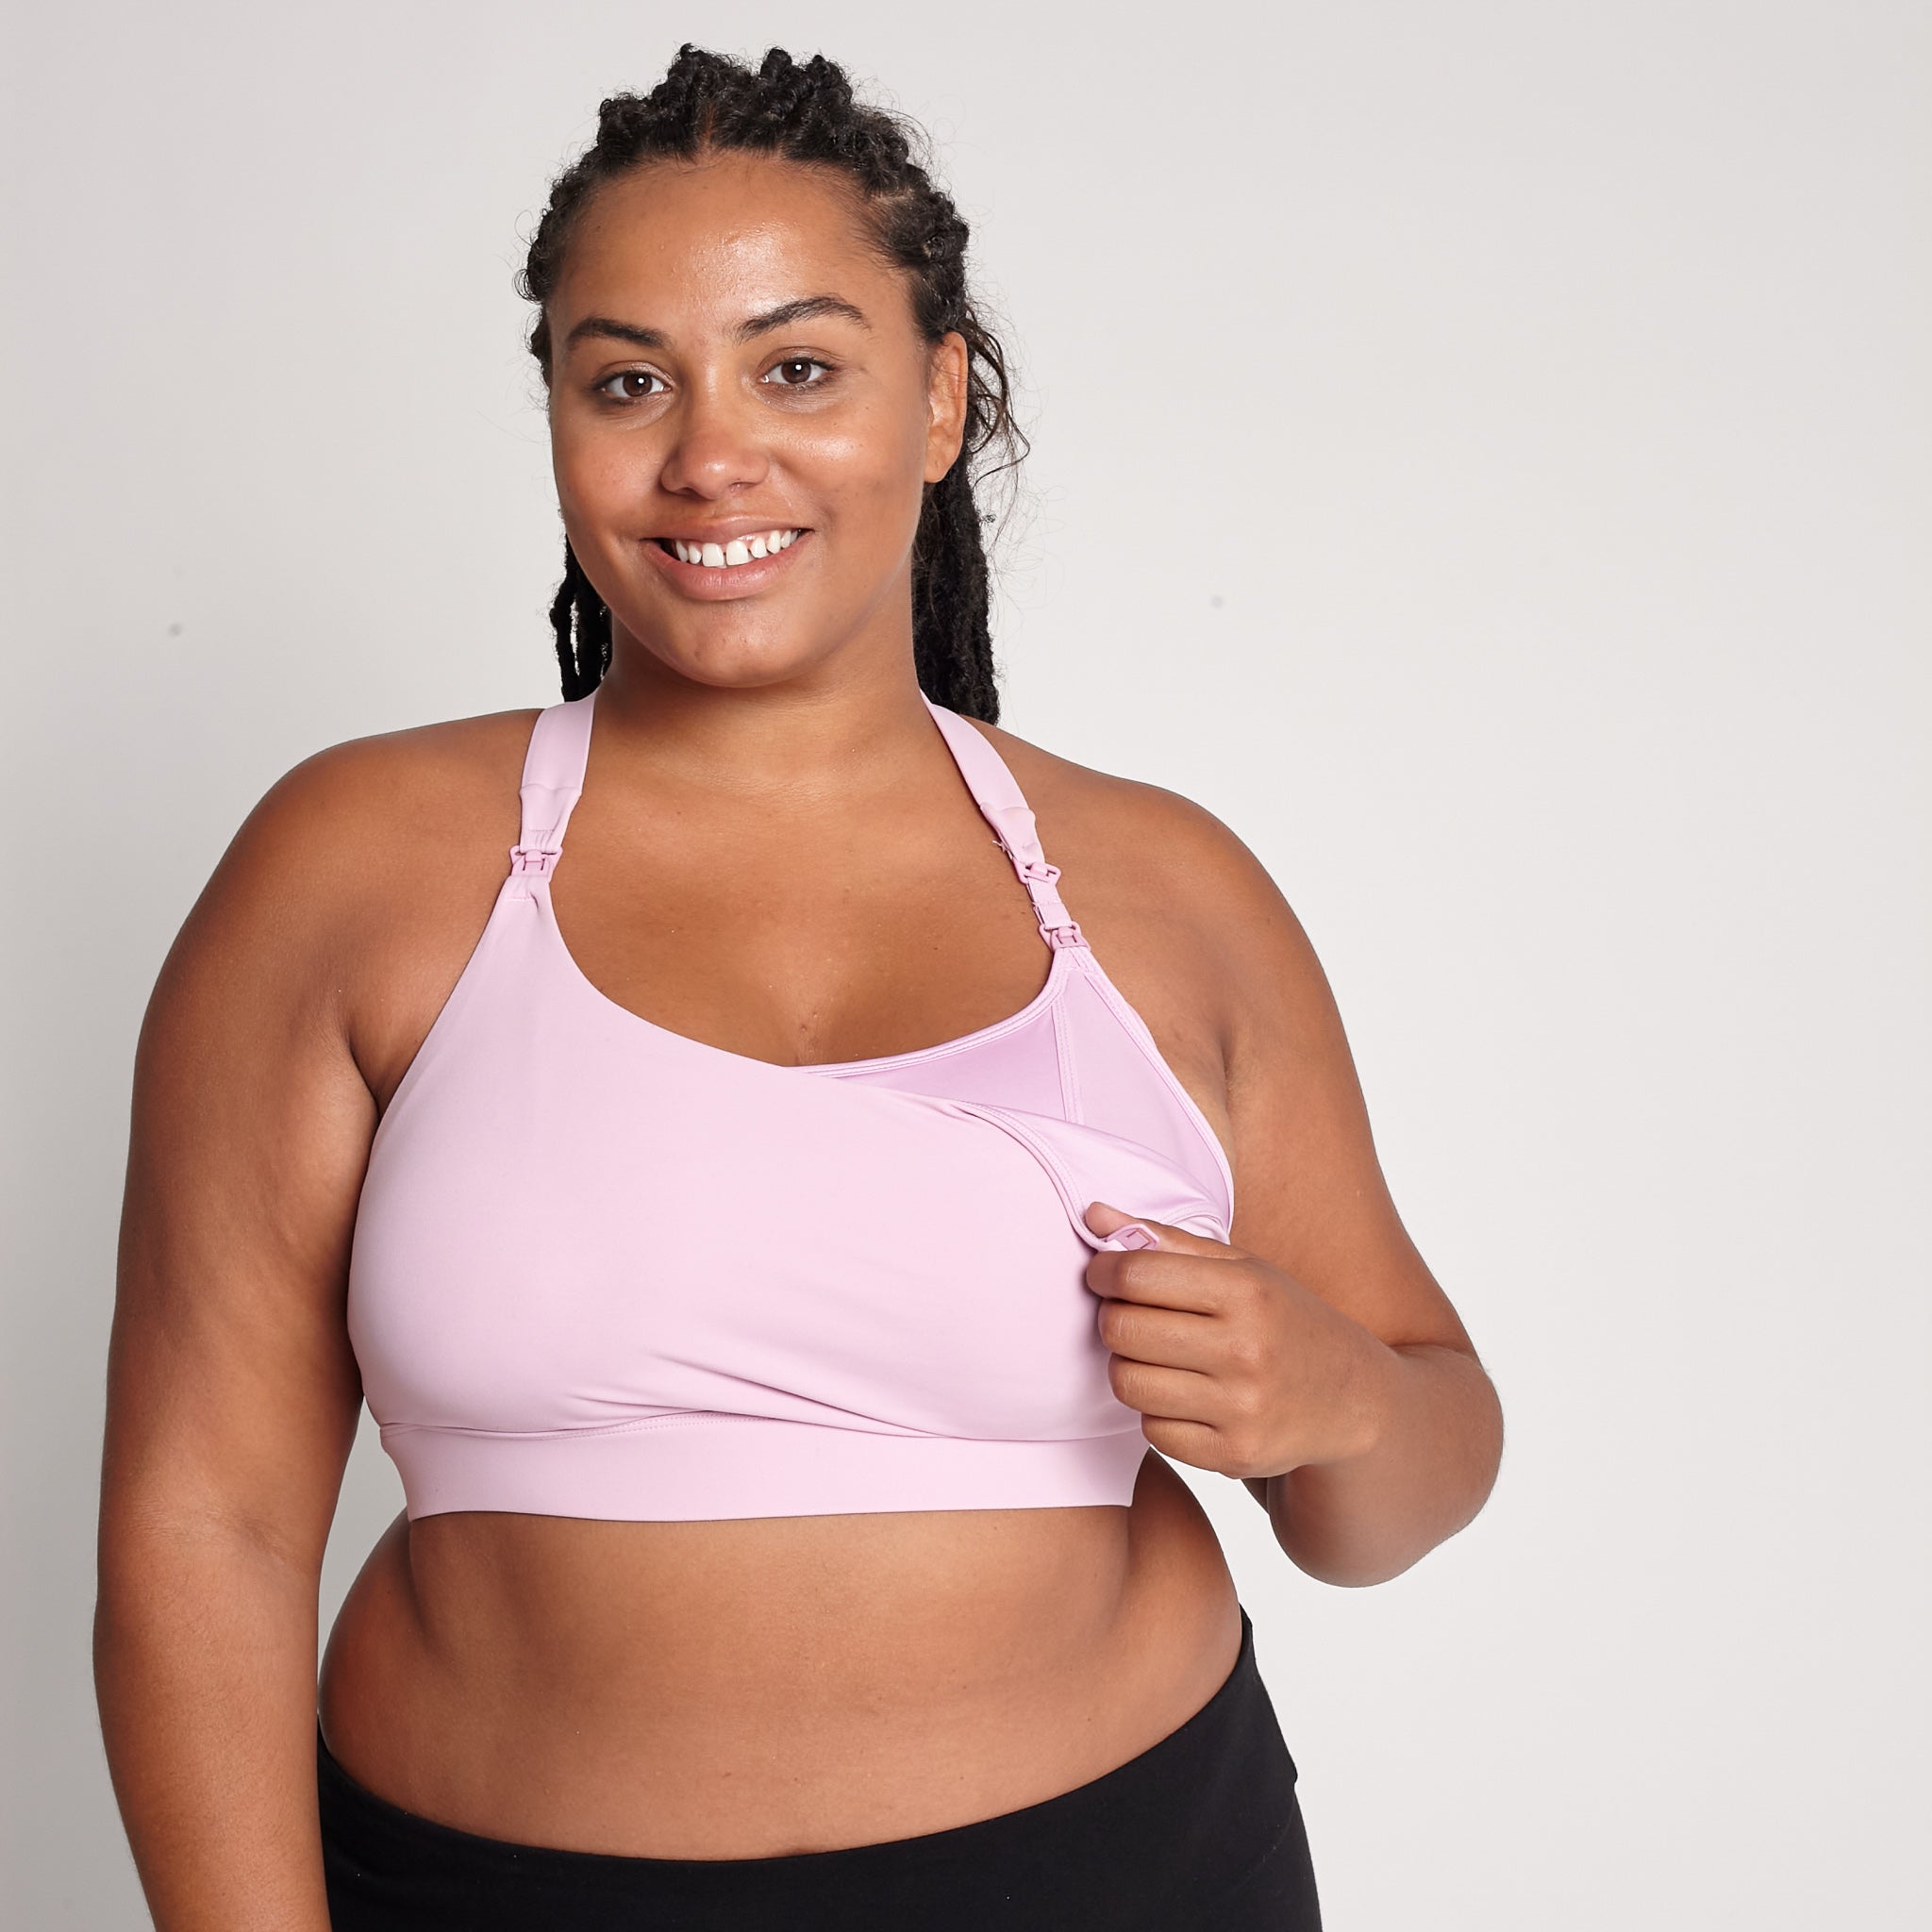 Chloé 3 Running Nursing Sports Bra (Blush Pink) – Sweat and Milk LLC